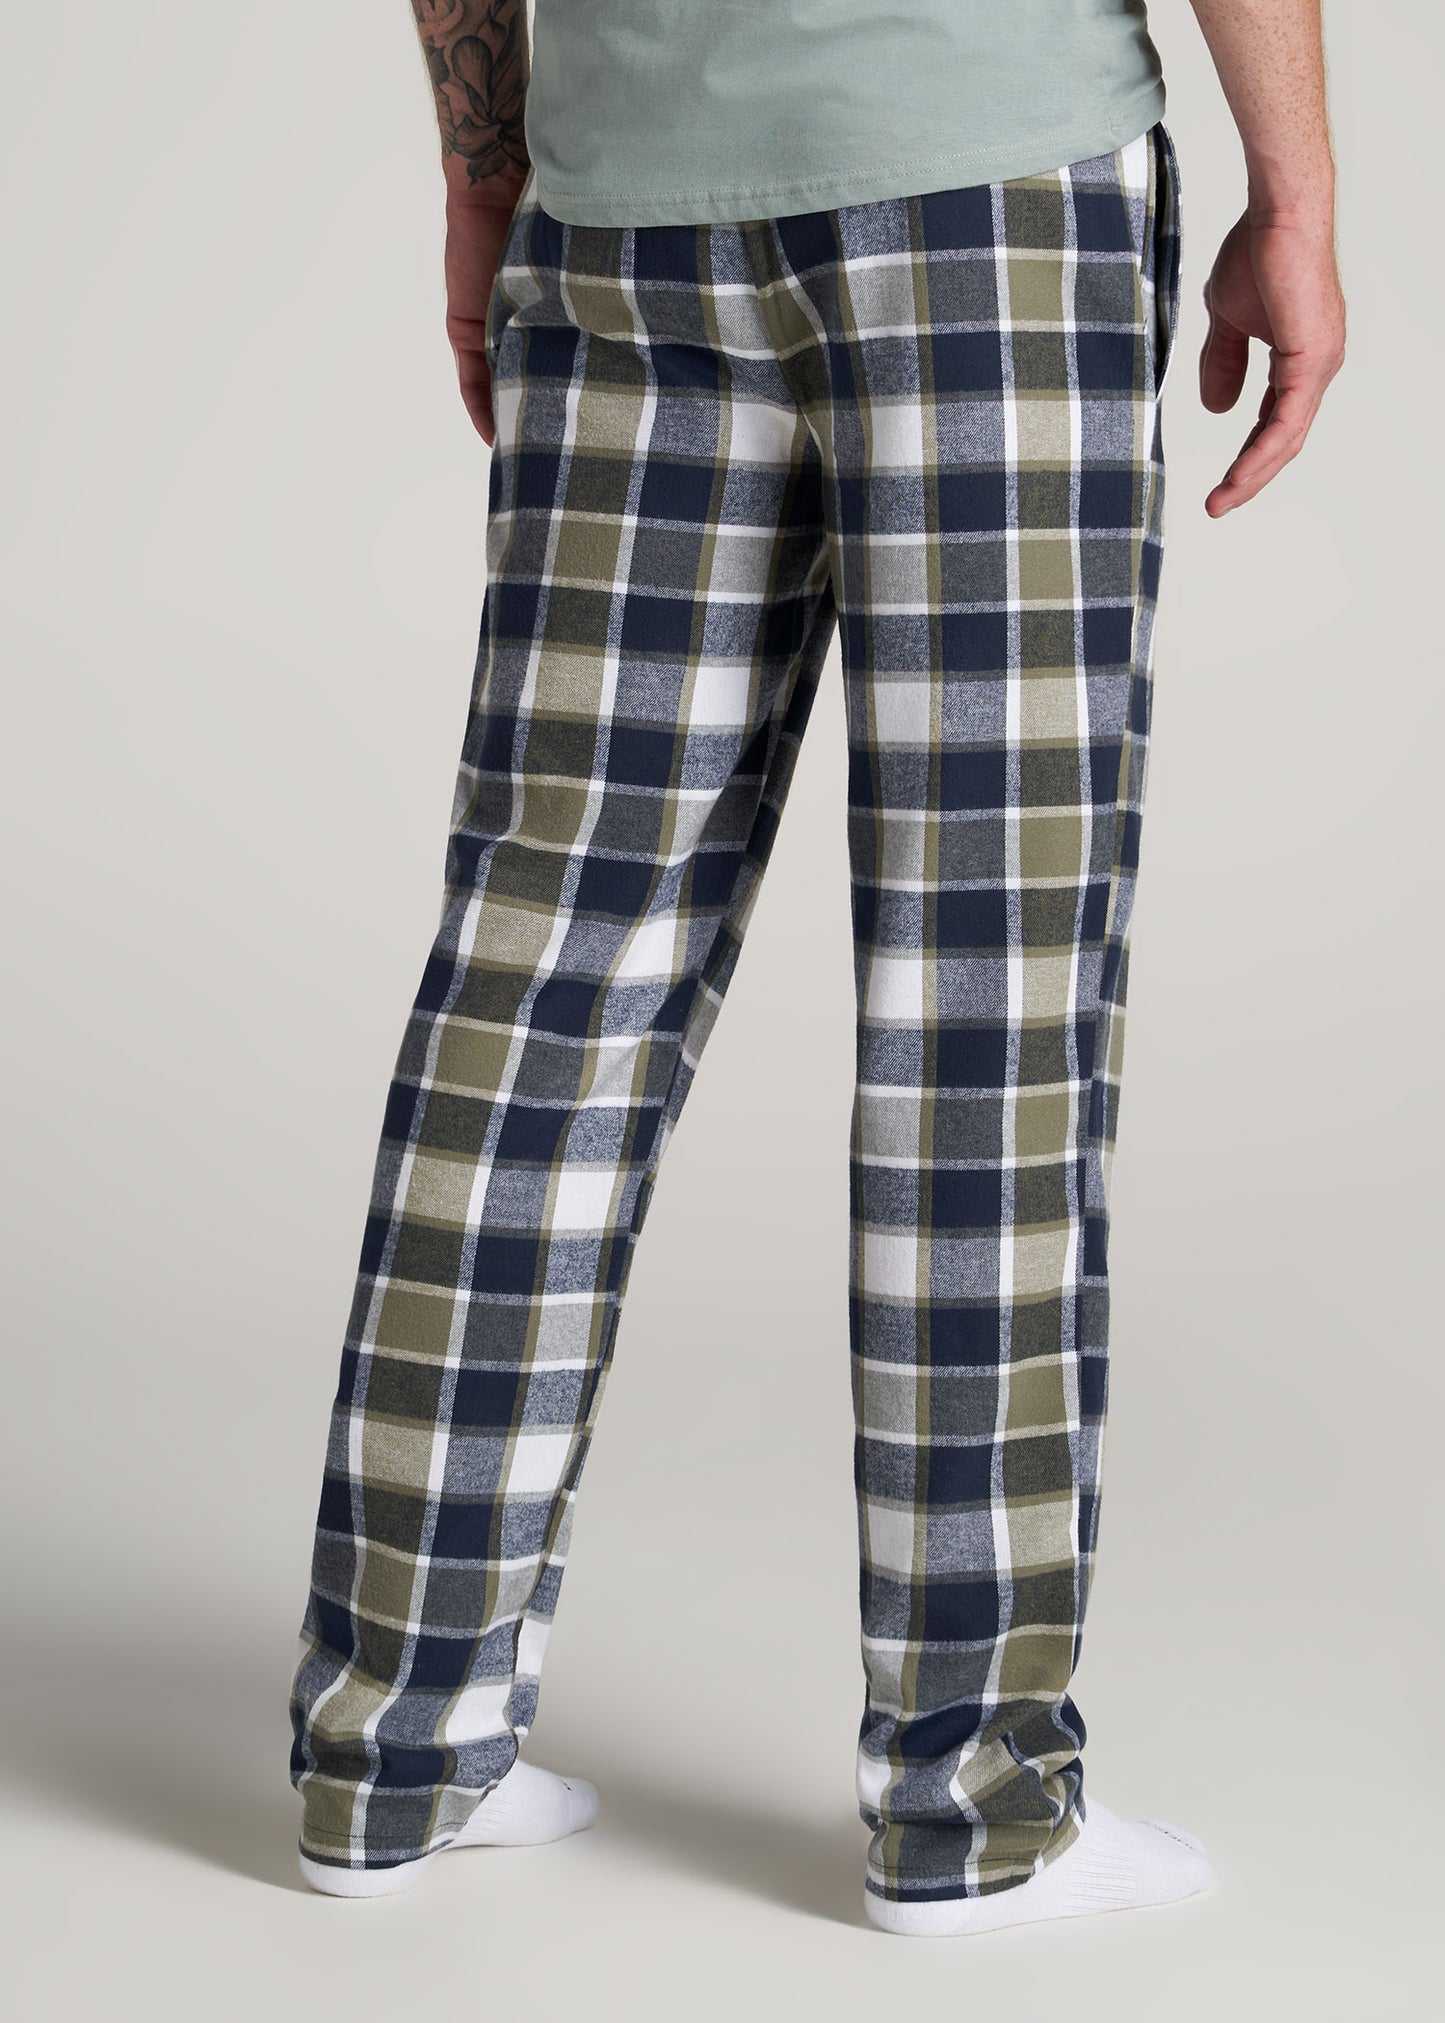 Relaxed Fit Pajama Pants - Dark blue/plaid - Men